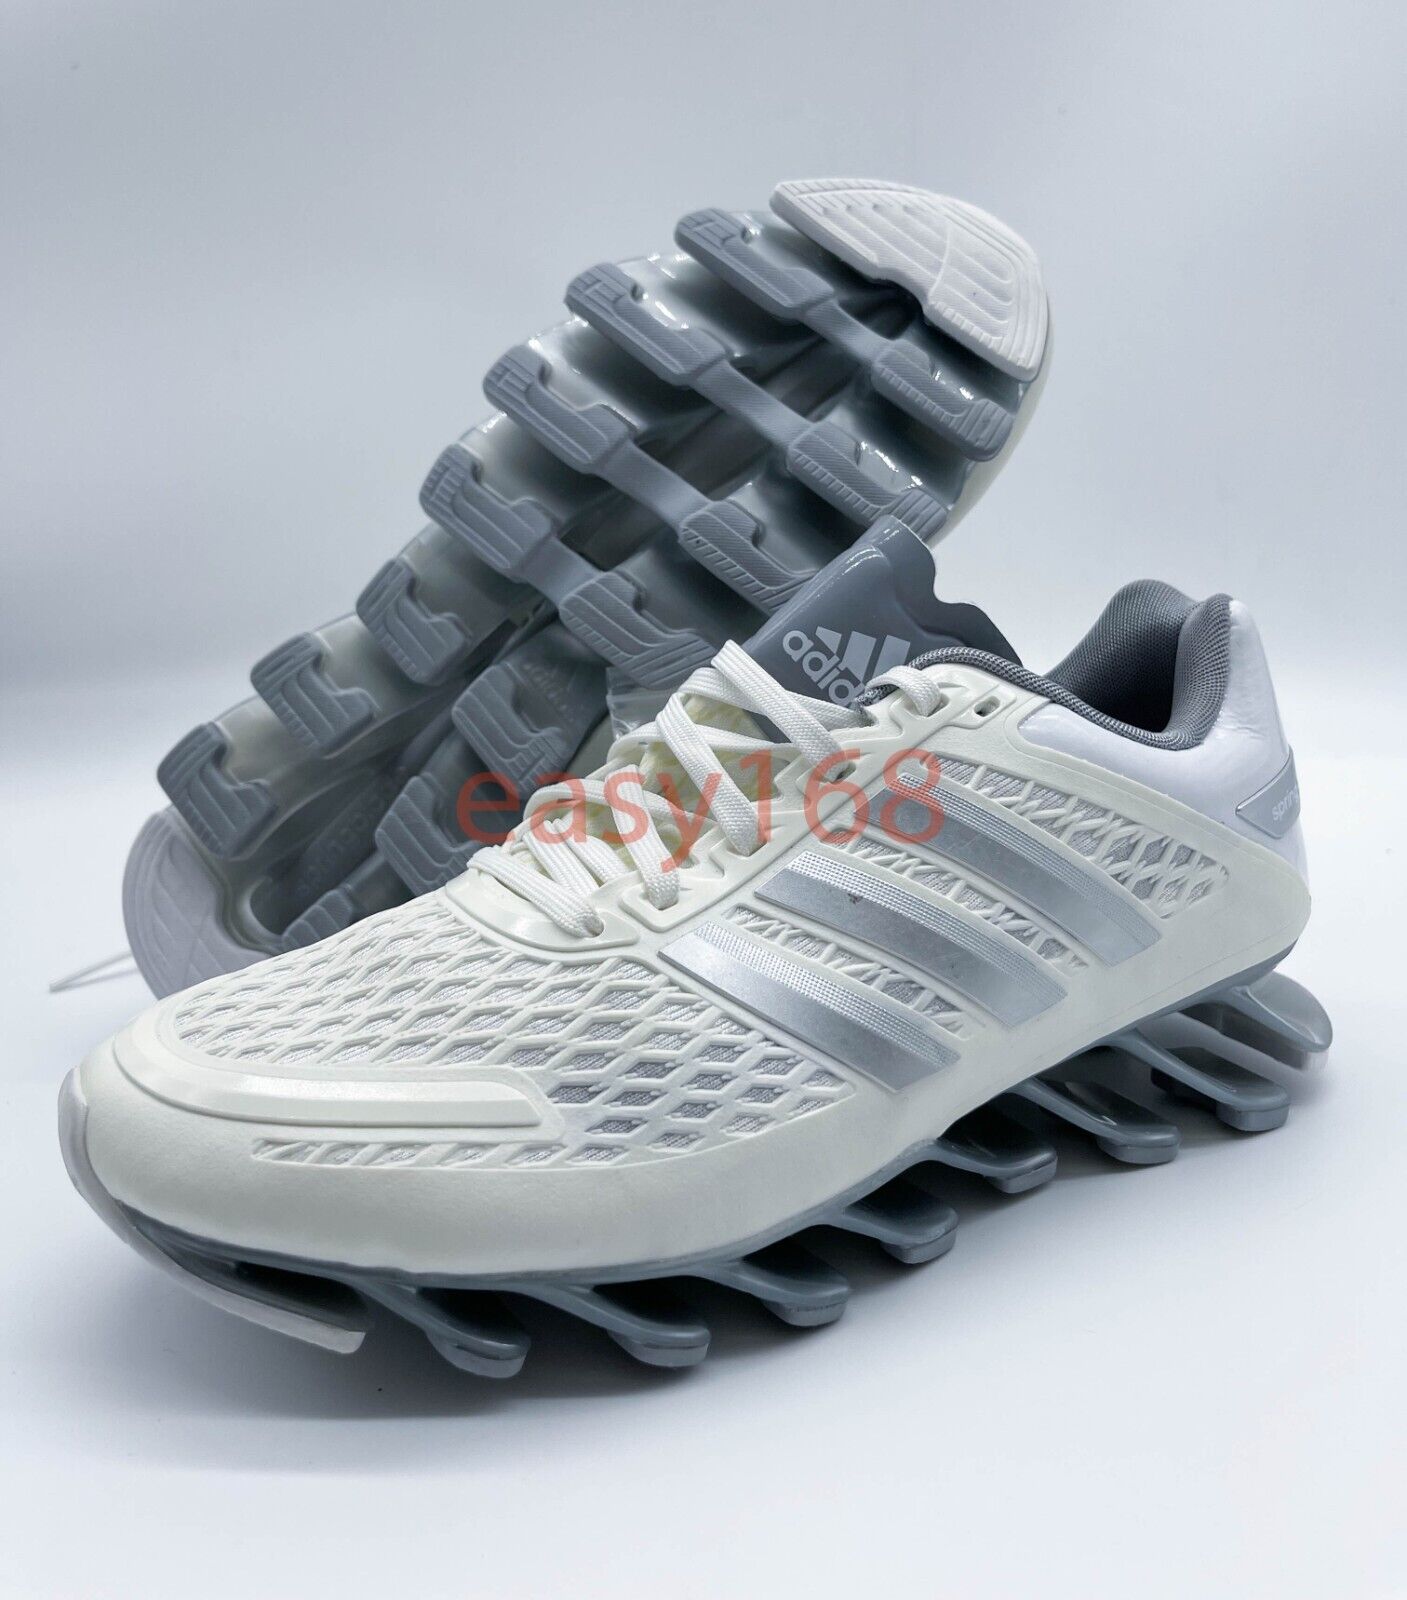 New ADIDAS Springblade Razor White Sprintweb J M21922 4.5 Running Shoes | eBay